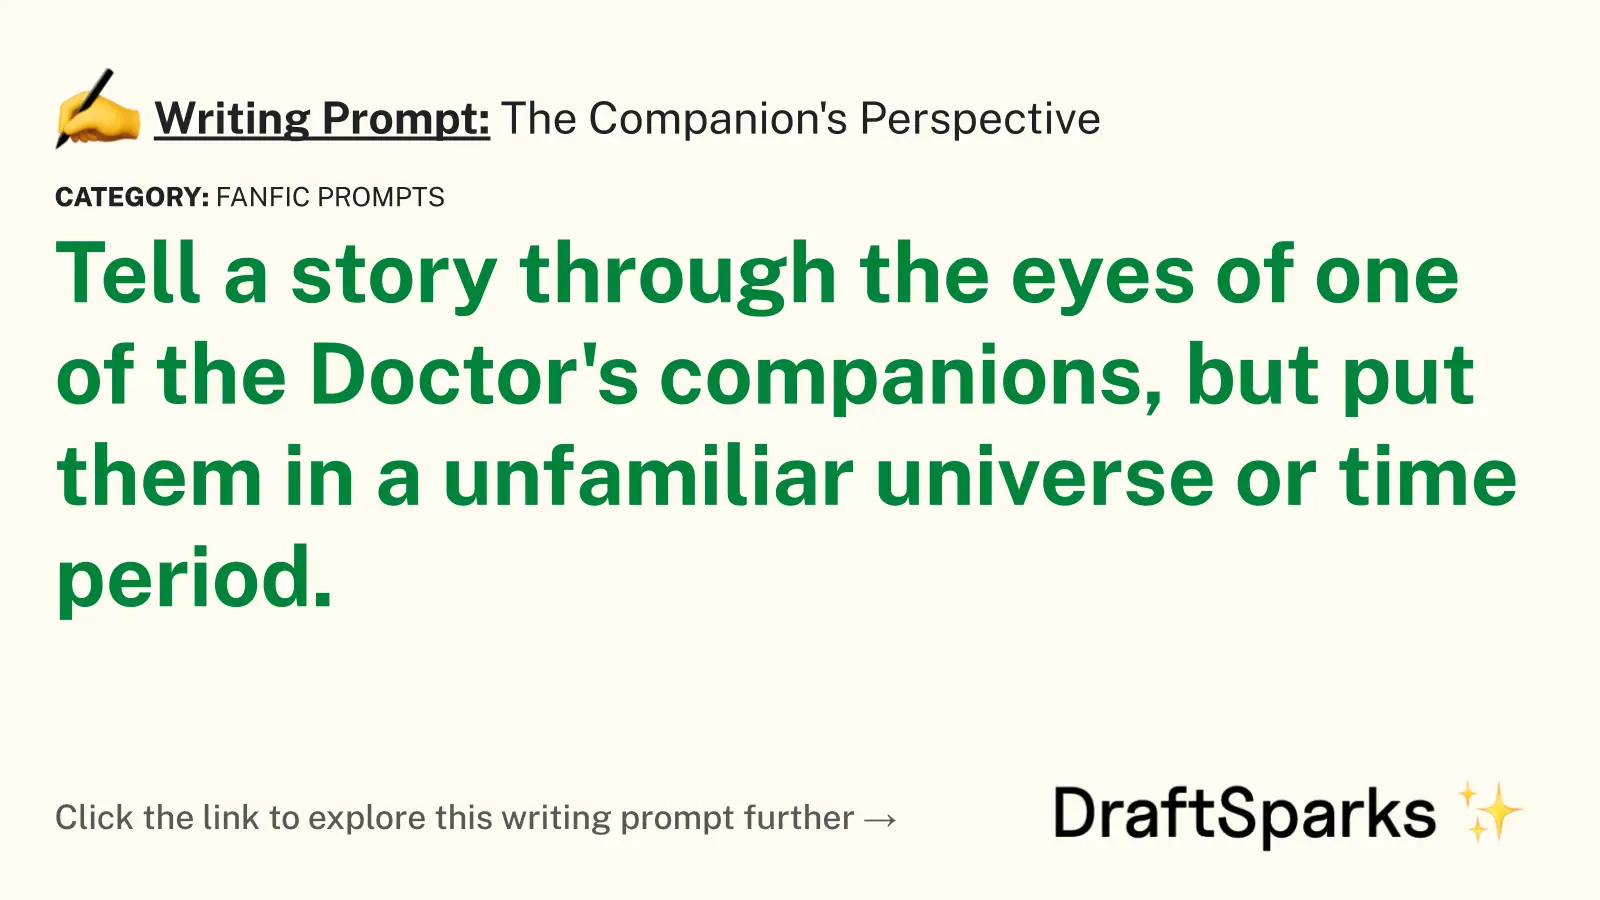 The Companion’s Perspective